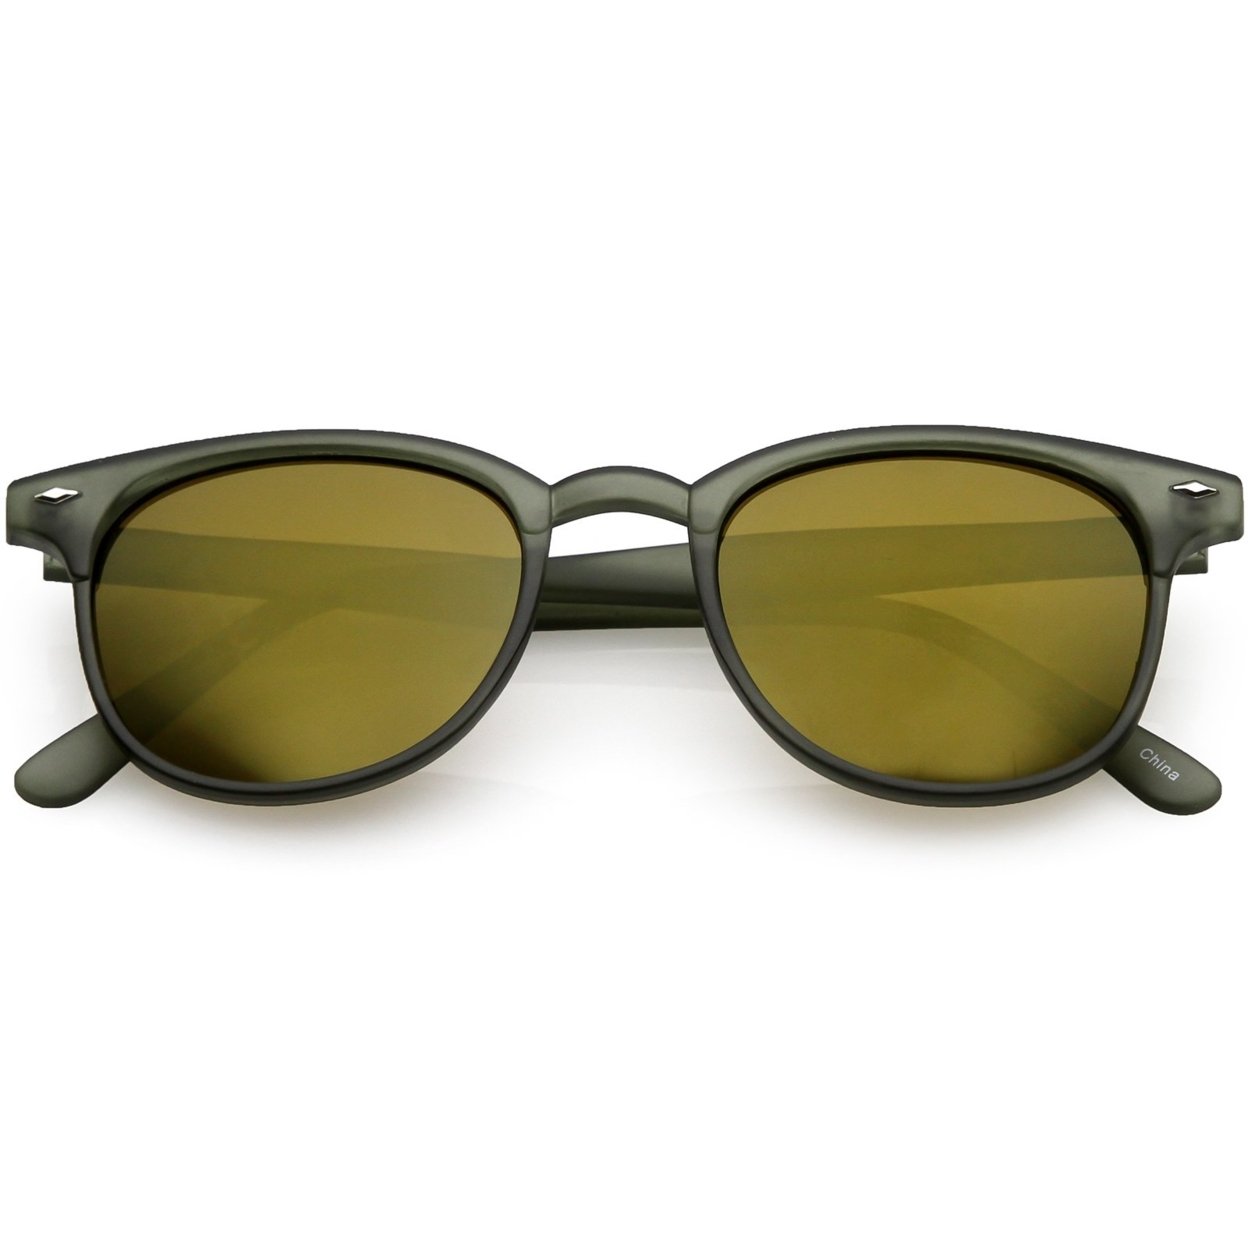 Classic Horn Rimmed Sunglasses Keyhole Nose Bridge Square Mirror Lens 49mm - Matte Frost / Magenta Mirror